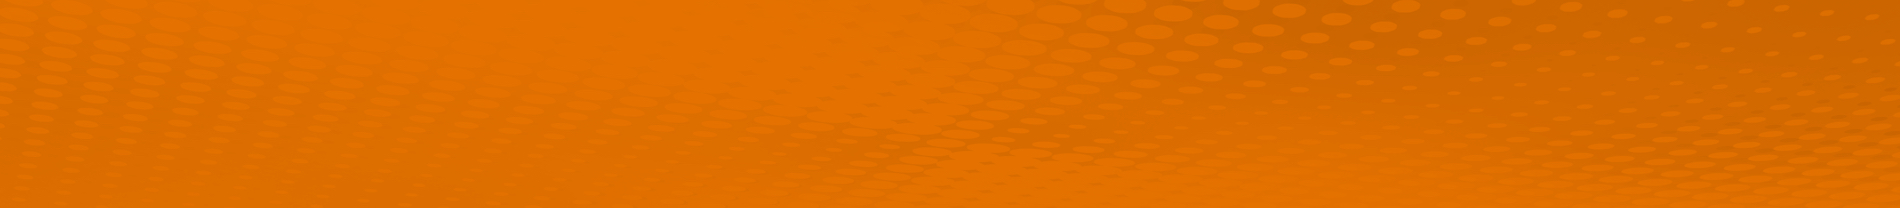 orange background with decorative dots